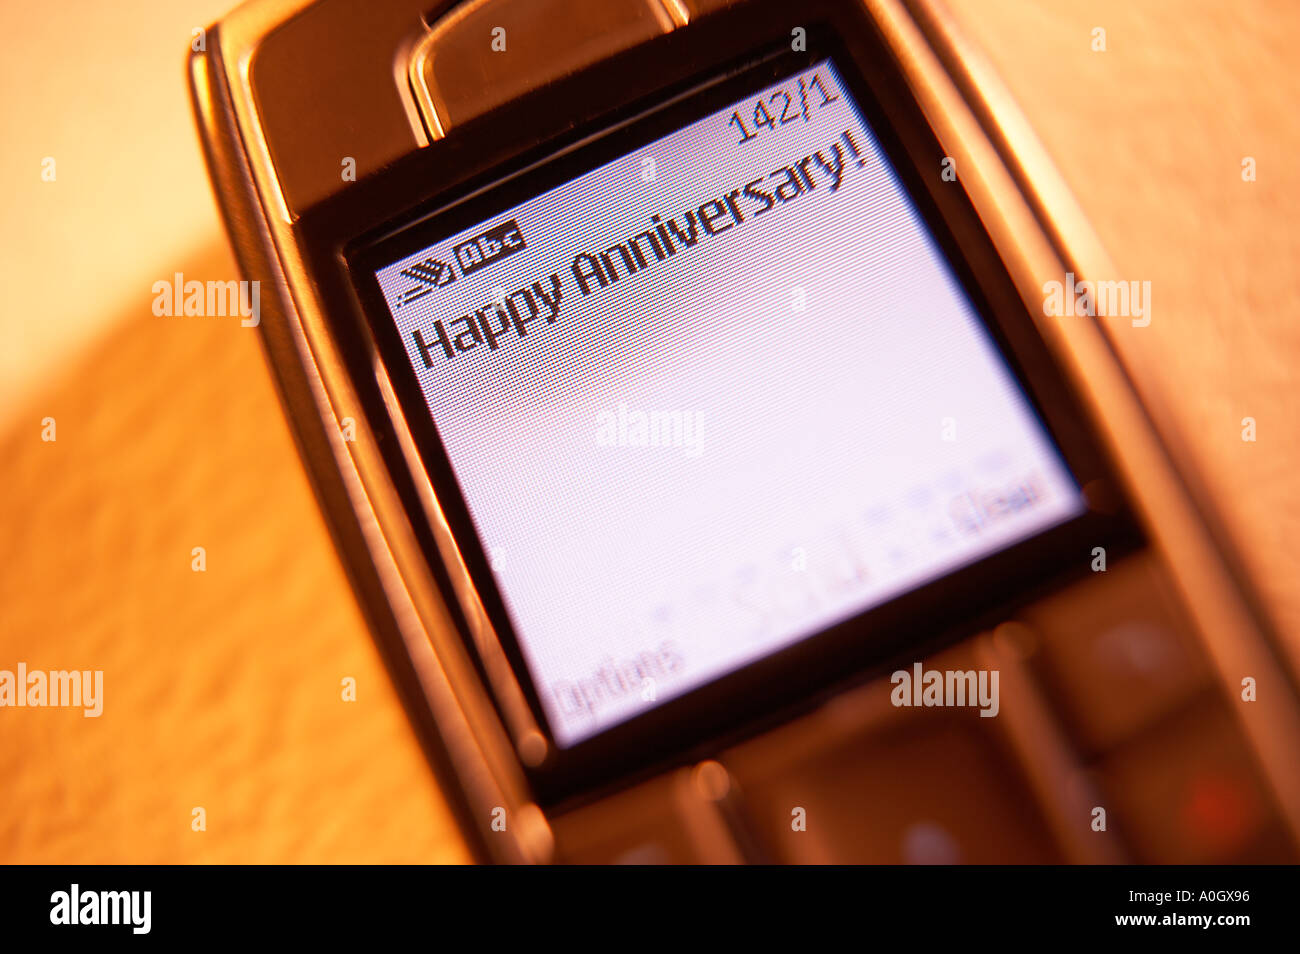 Mensaje de texto en la pantalla del teléfono móvil feliz aniversario Foto de stock